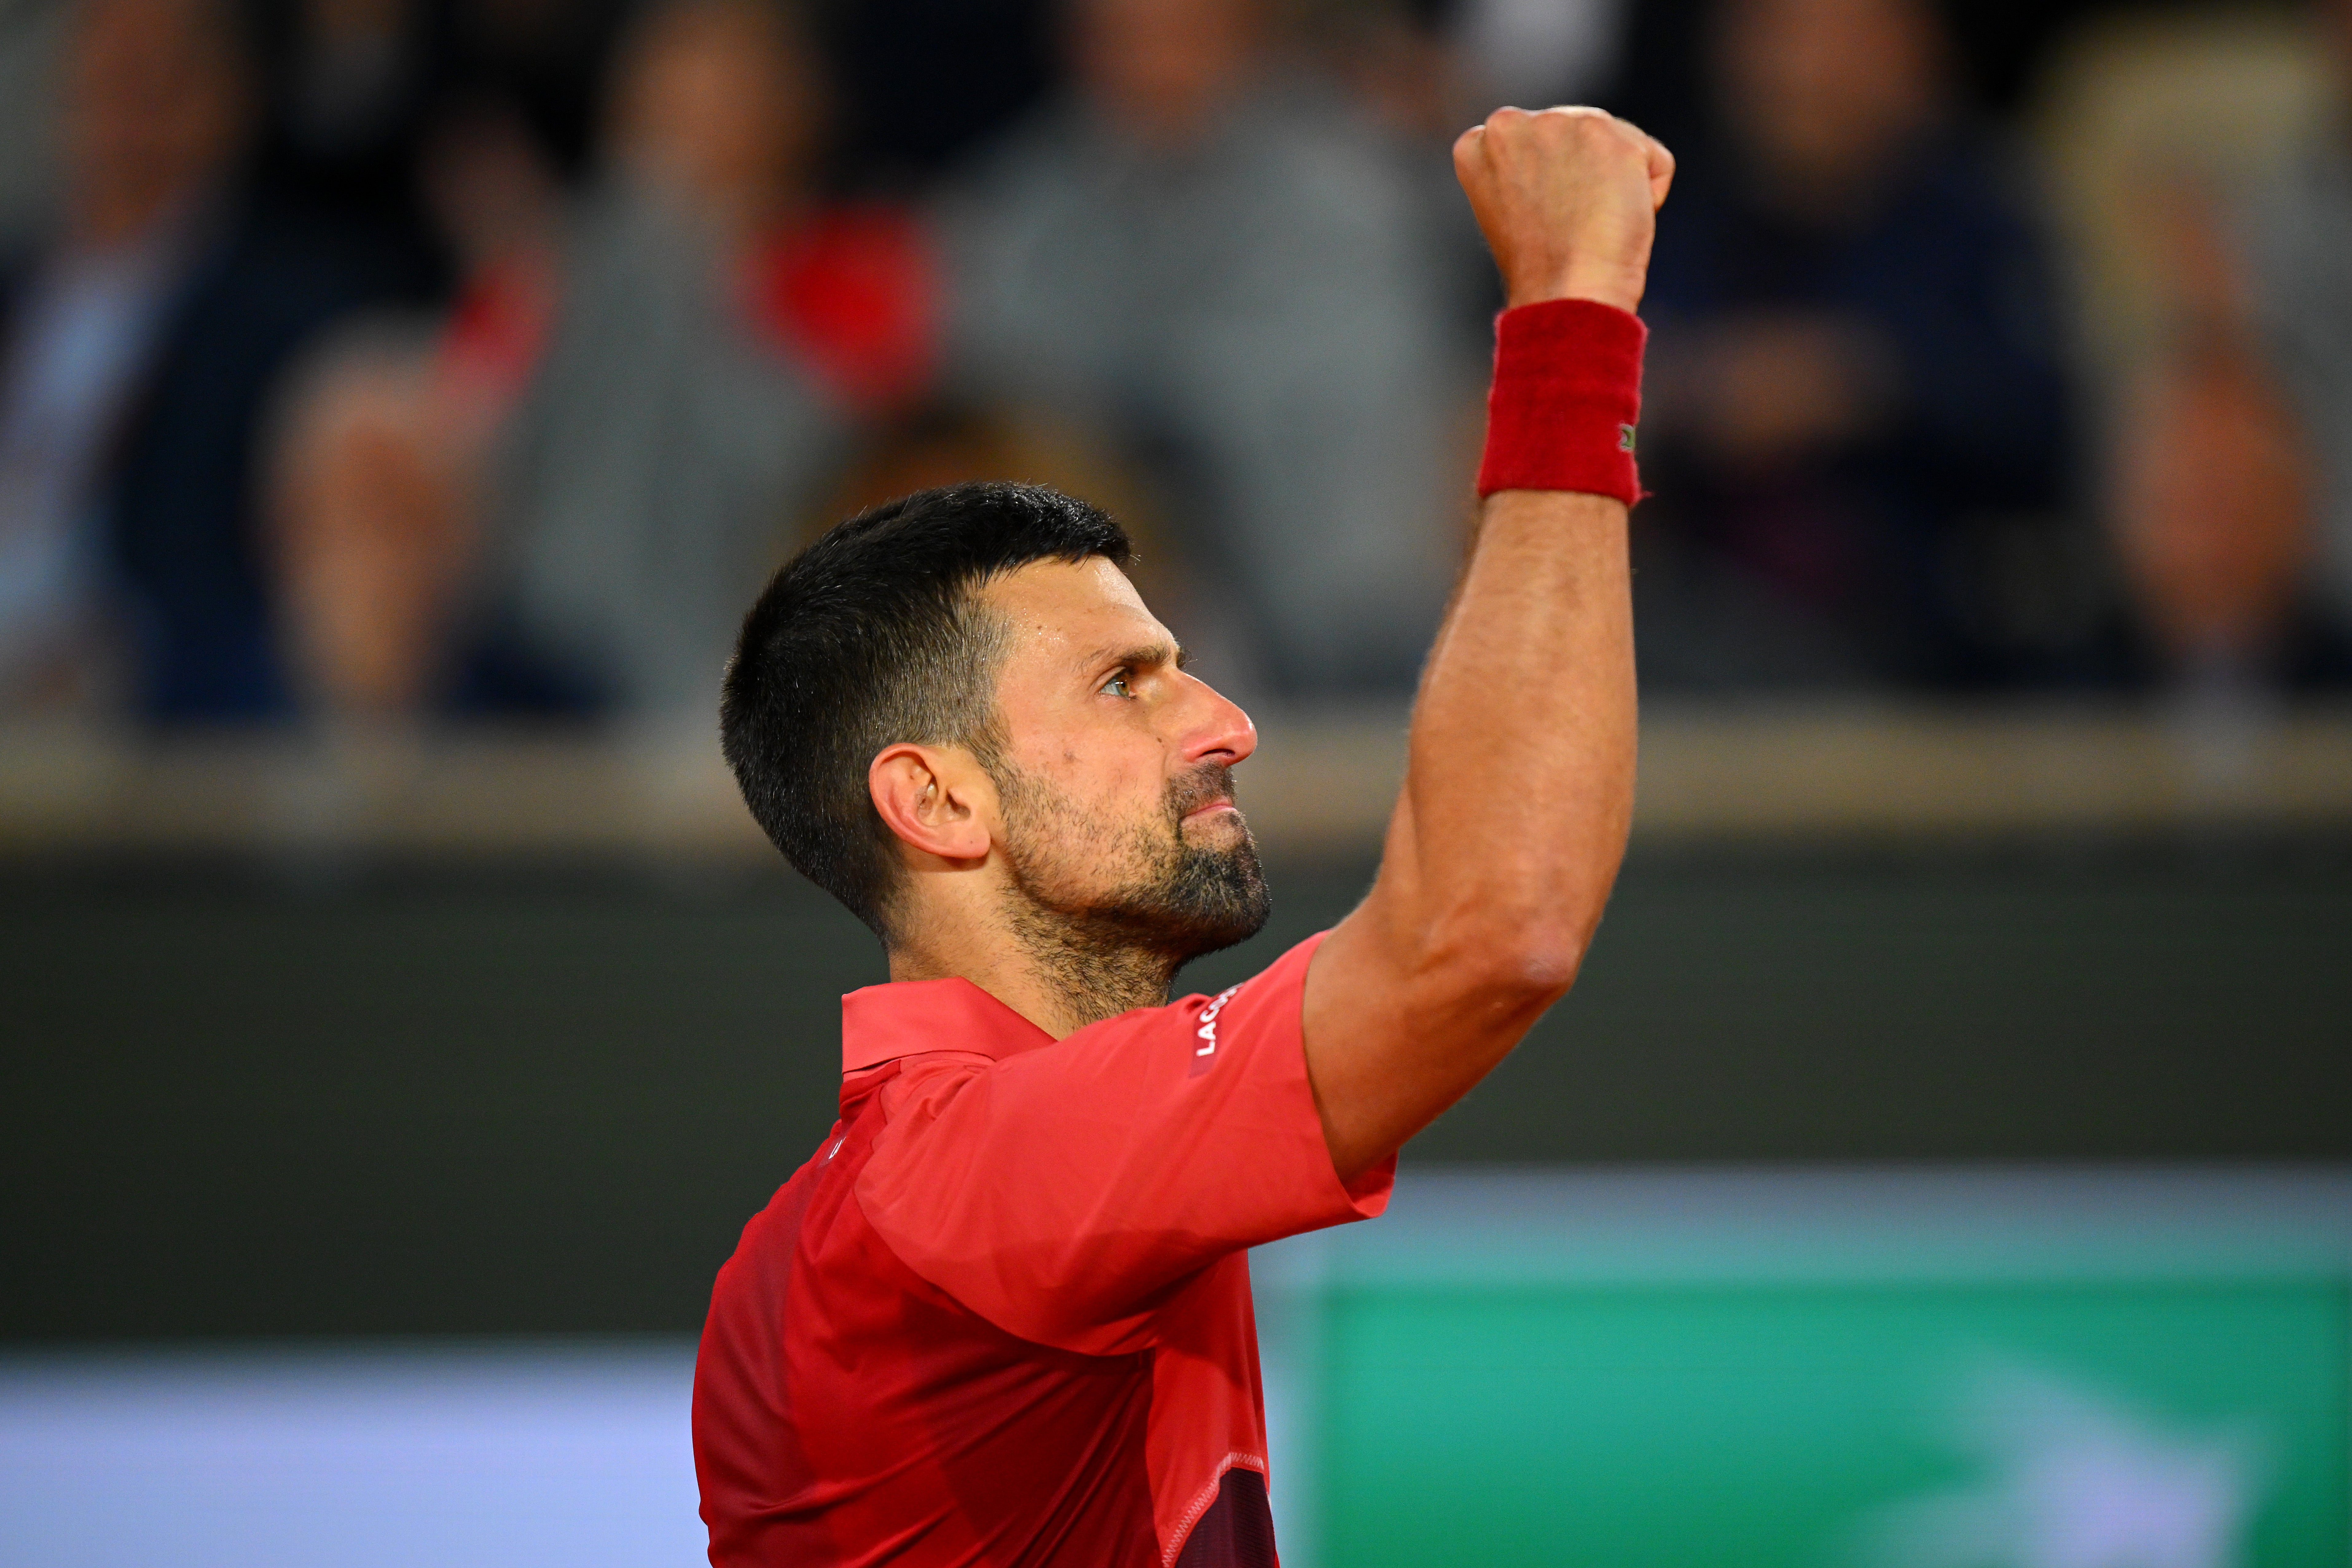 Novak Djokovic progressed to the French Open second round